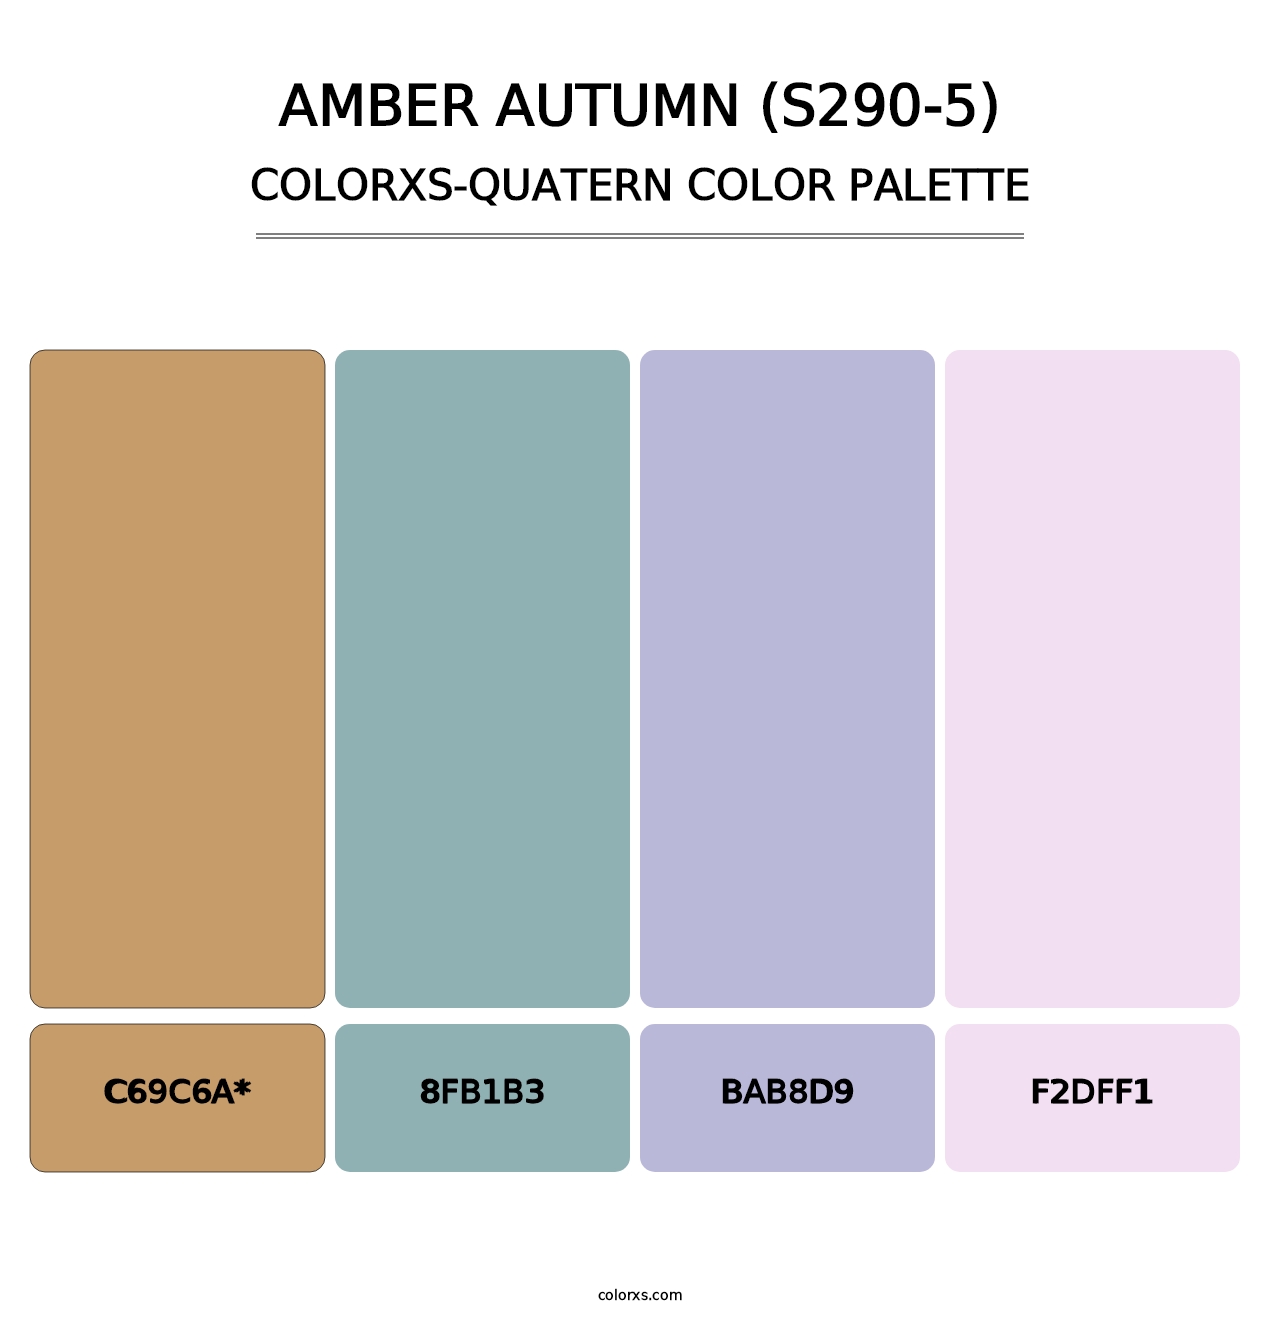 Amber Autumn (S290-5) - Colorxs Quatern Palette